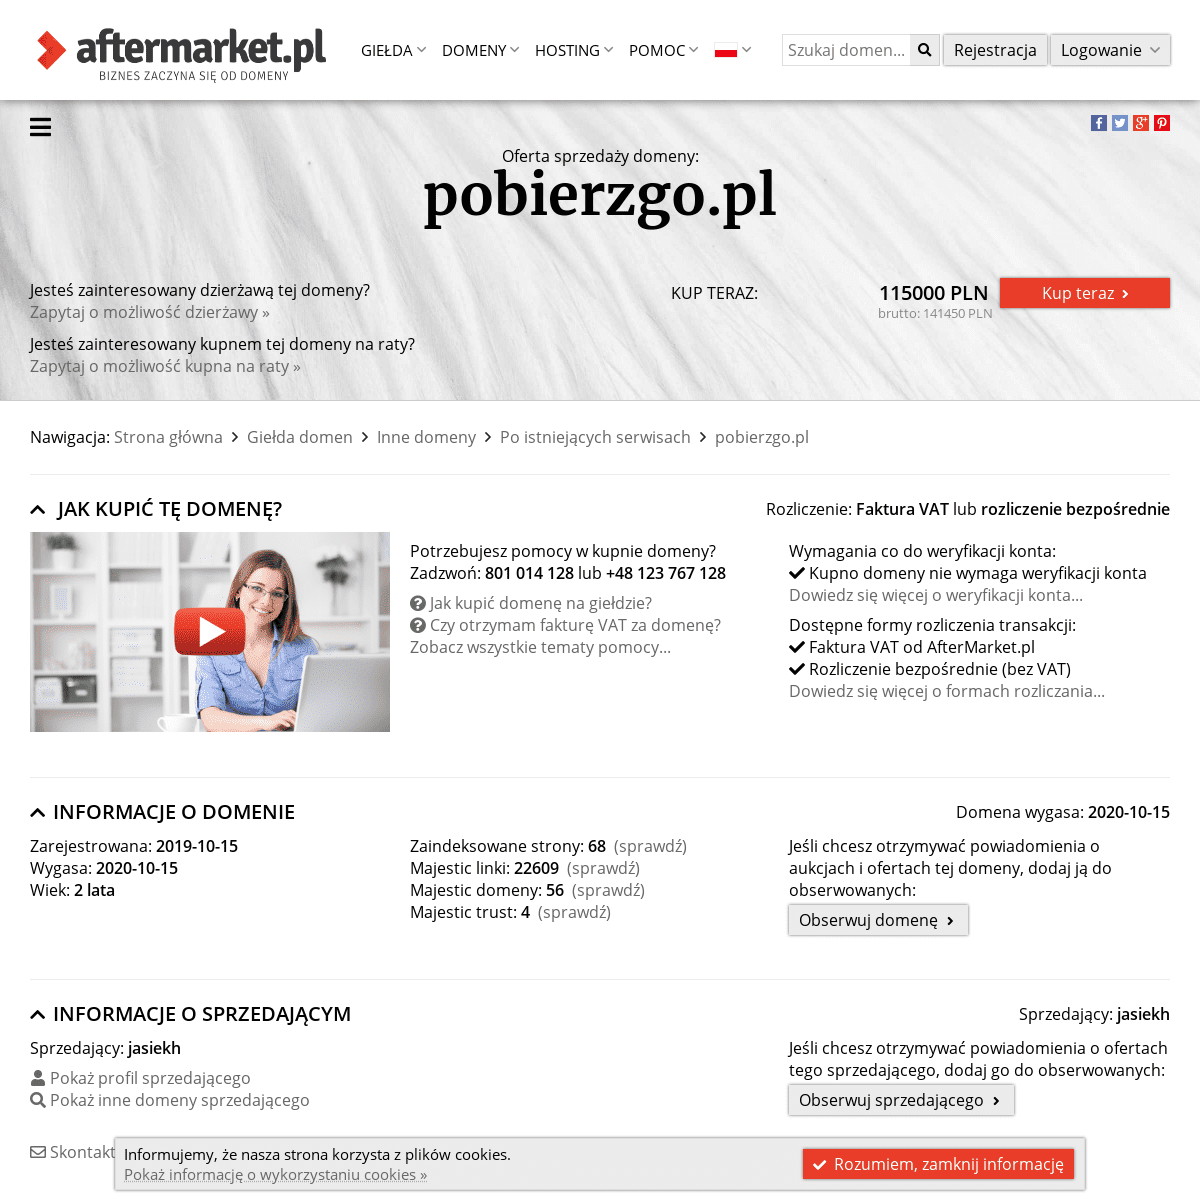 A complete backup of pobierzgo.pl